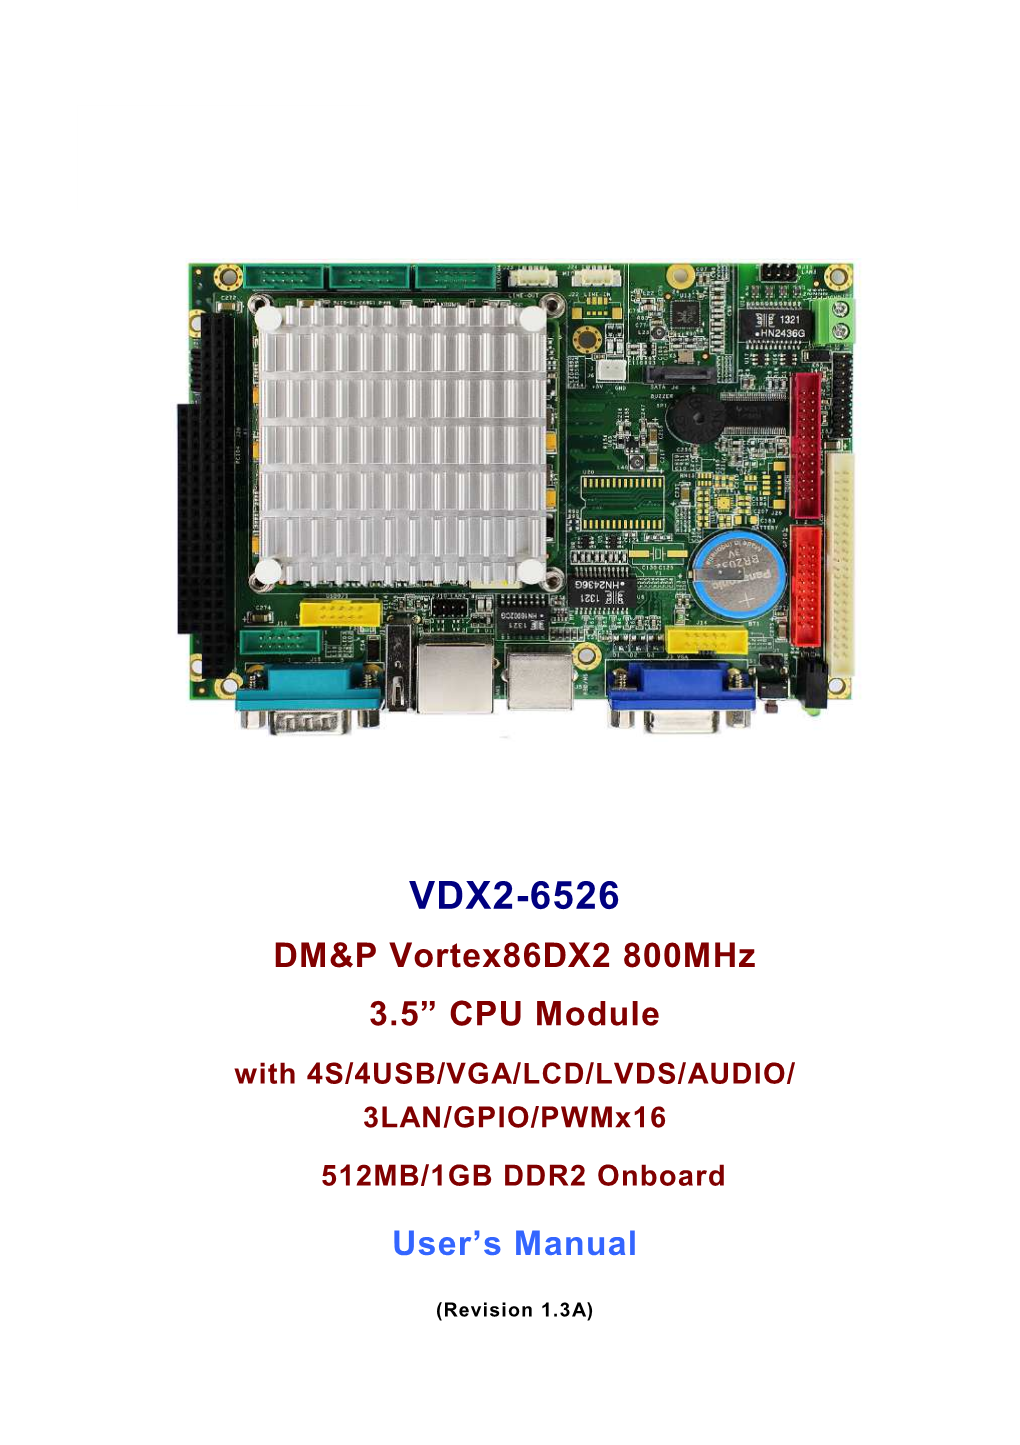 VDX2-6526 DM&P Vortex86dx2 800Mhz 3.5” CPU Module with 4S/4USB/VGA/LCD/LVDS/AUDIO/ 3LAN/GPIO/Pwmx16 512MB/1GB DDR2 Onboard